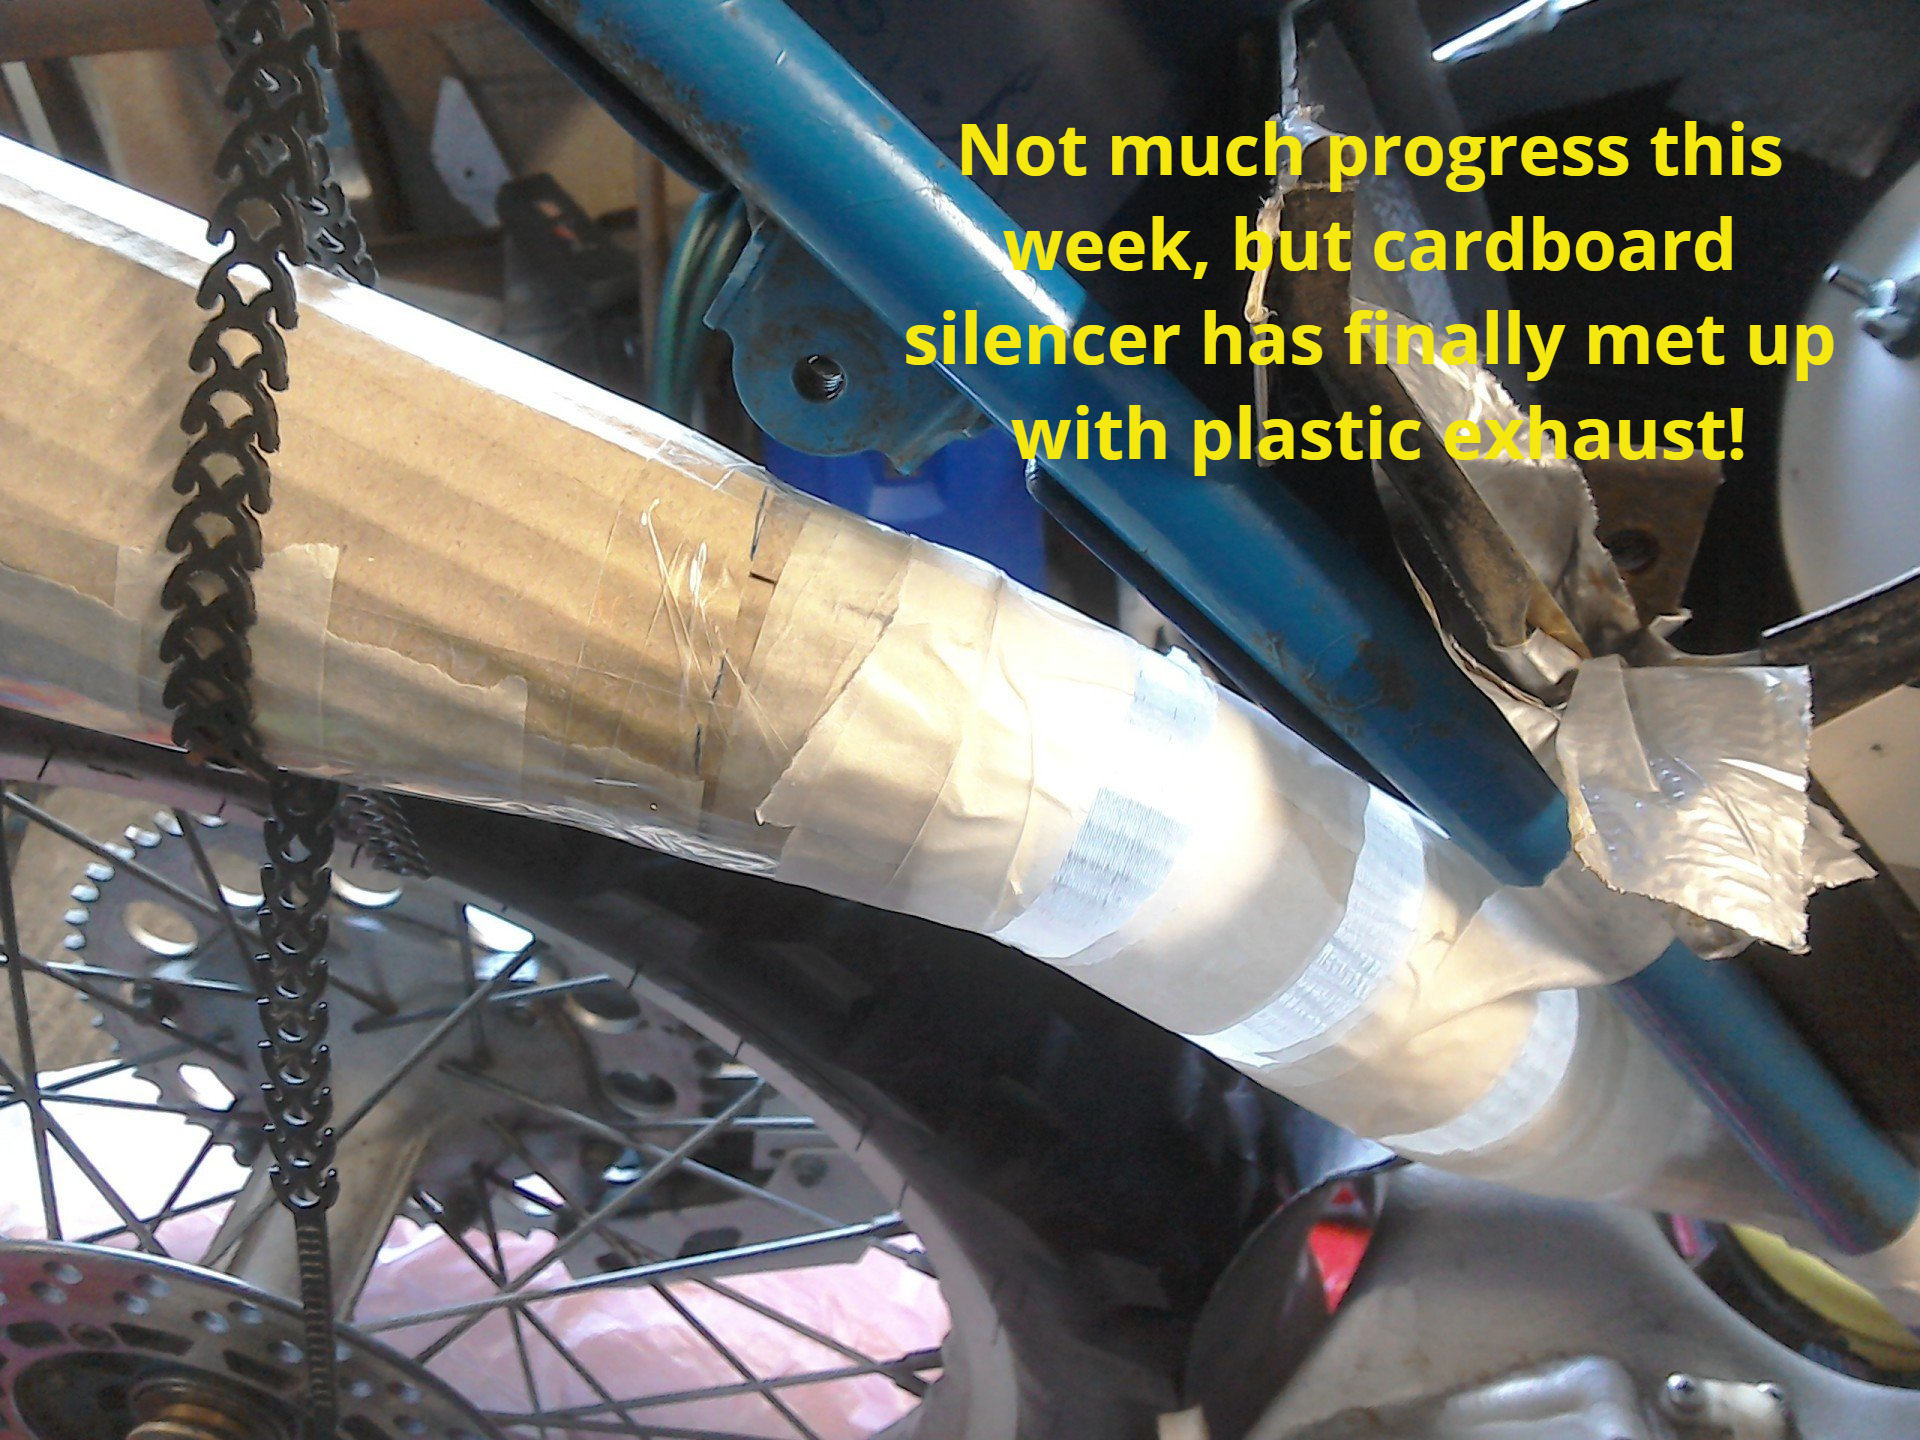 Plastic exhaust meets cardboard silencer